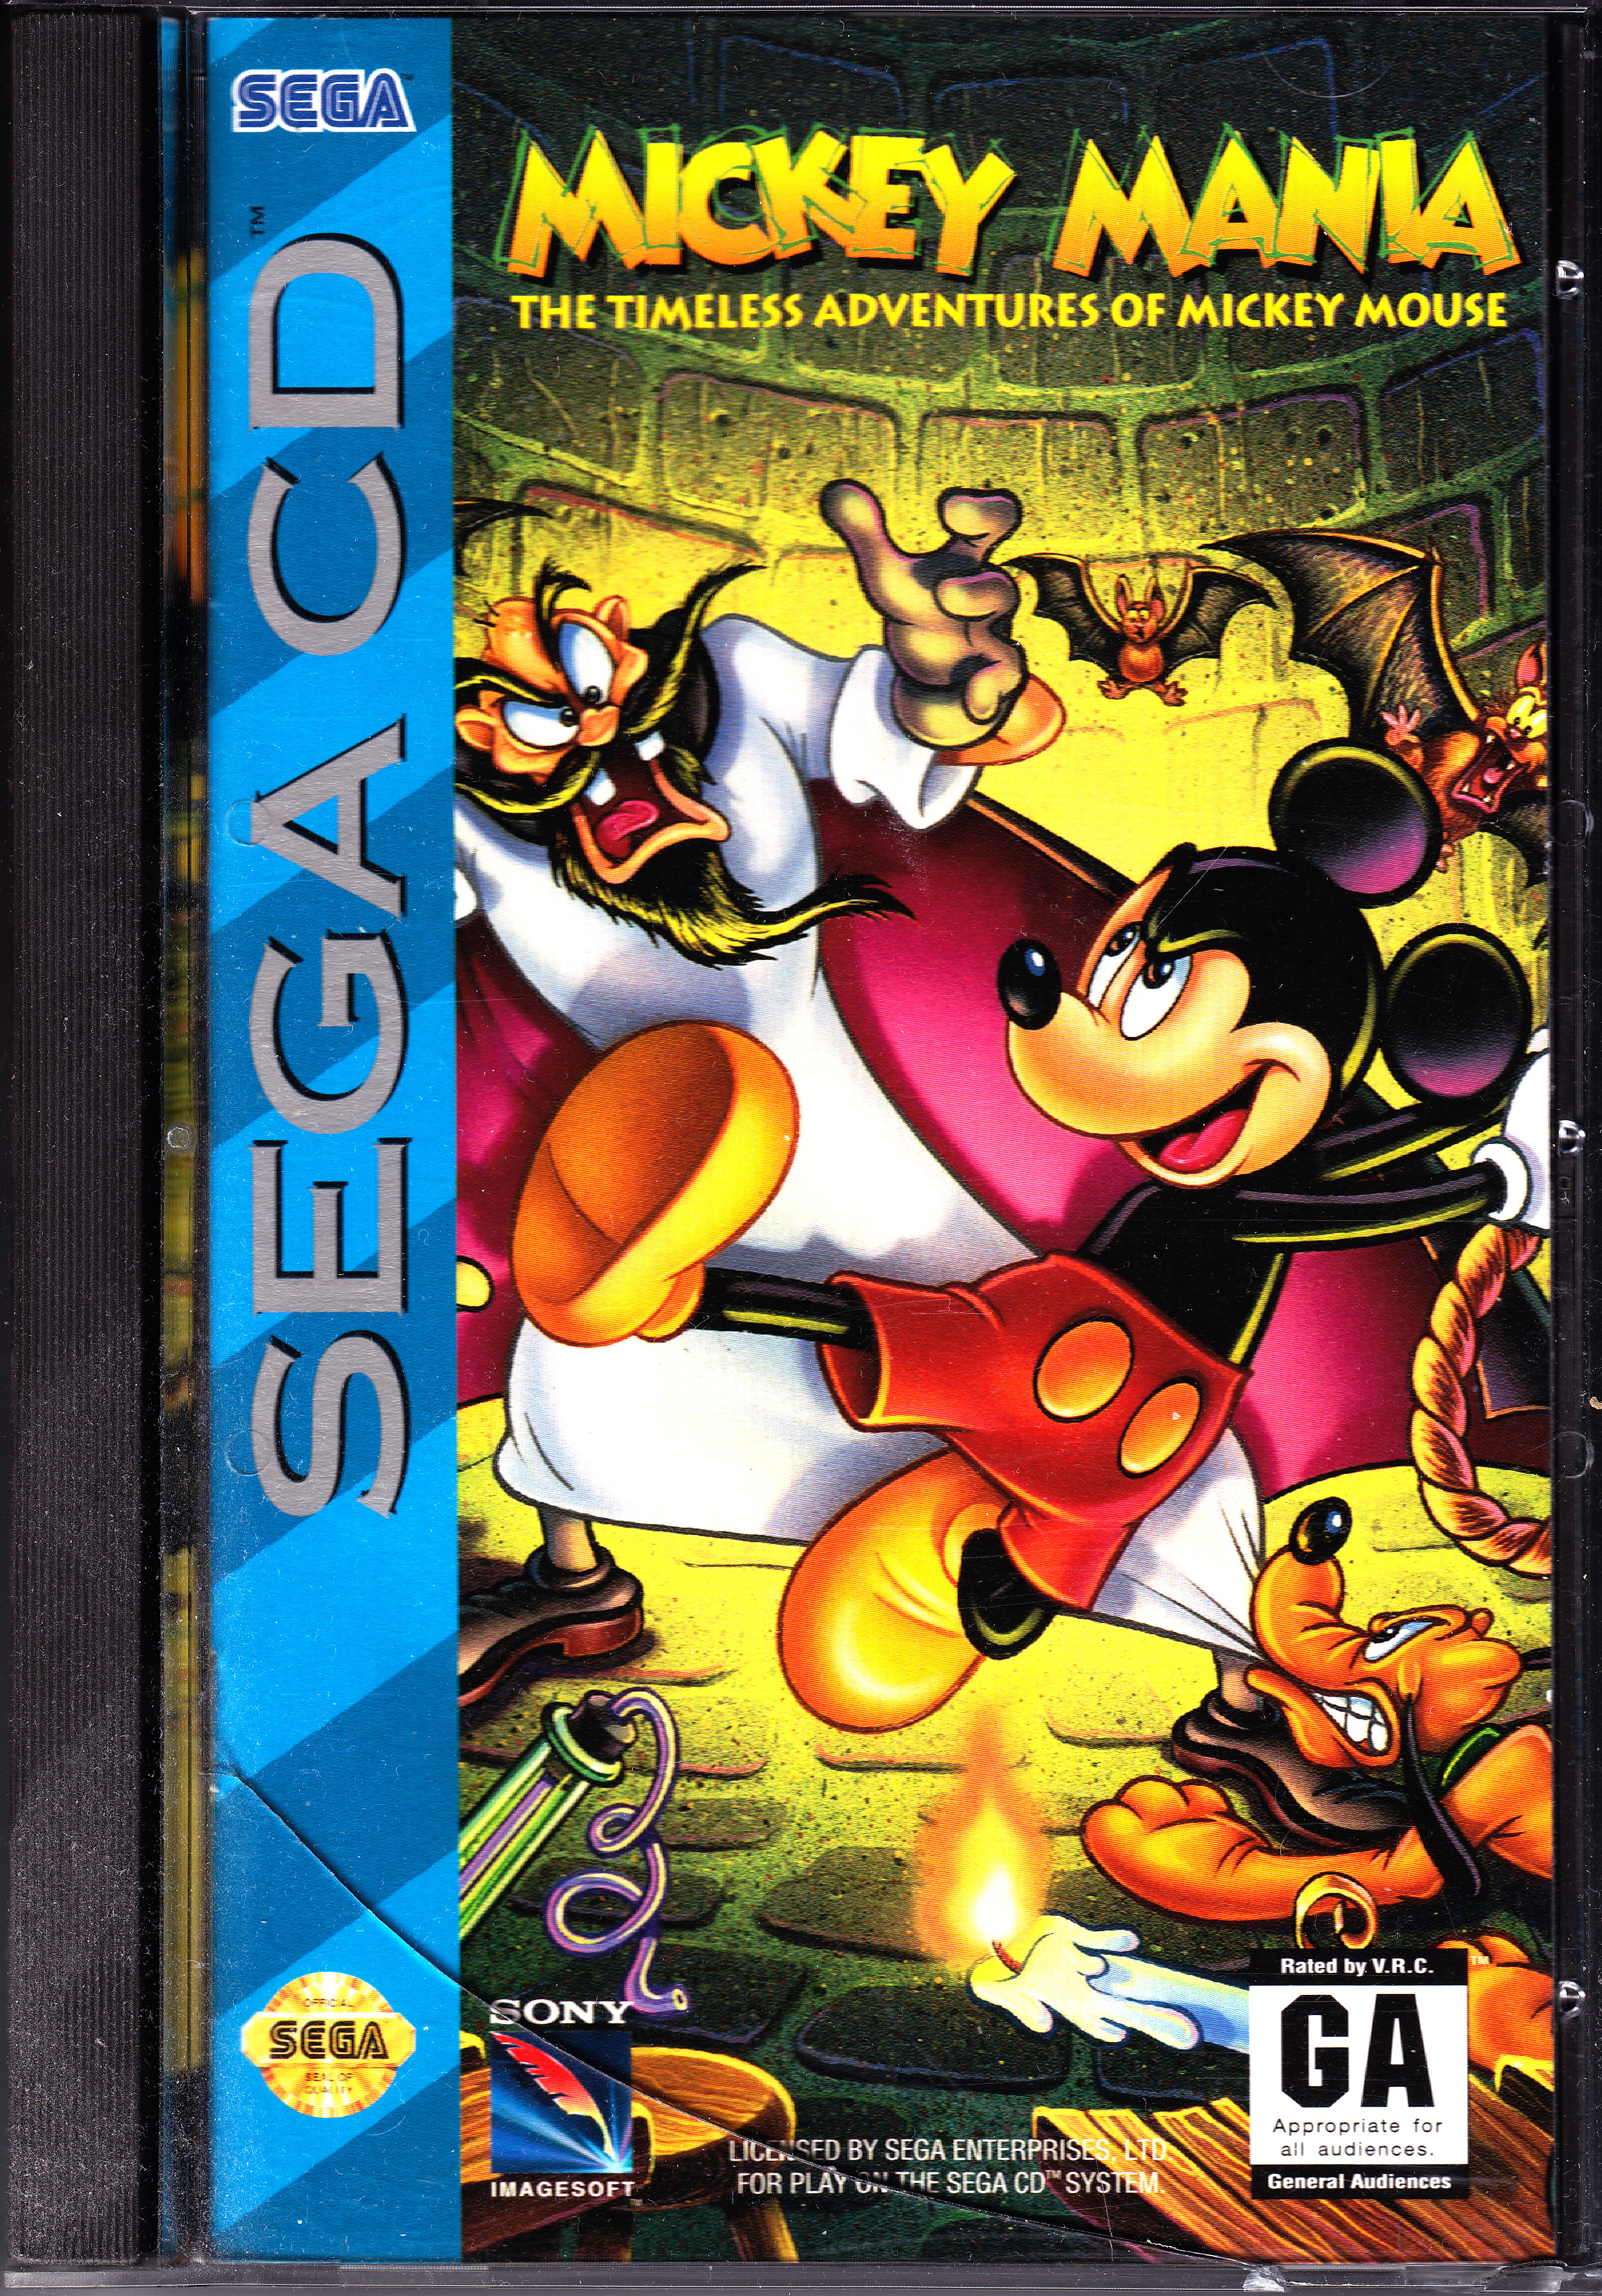 Mickey s adventures. Микки Мания Sega. Игры про Микки Мауса на сега. Mickey Mania: the Timeless Adventures of Mickey Mouse. Игра про Микки Мауса на Xbox 360.